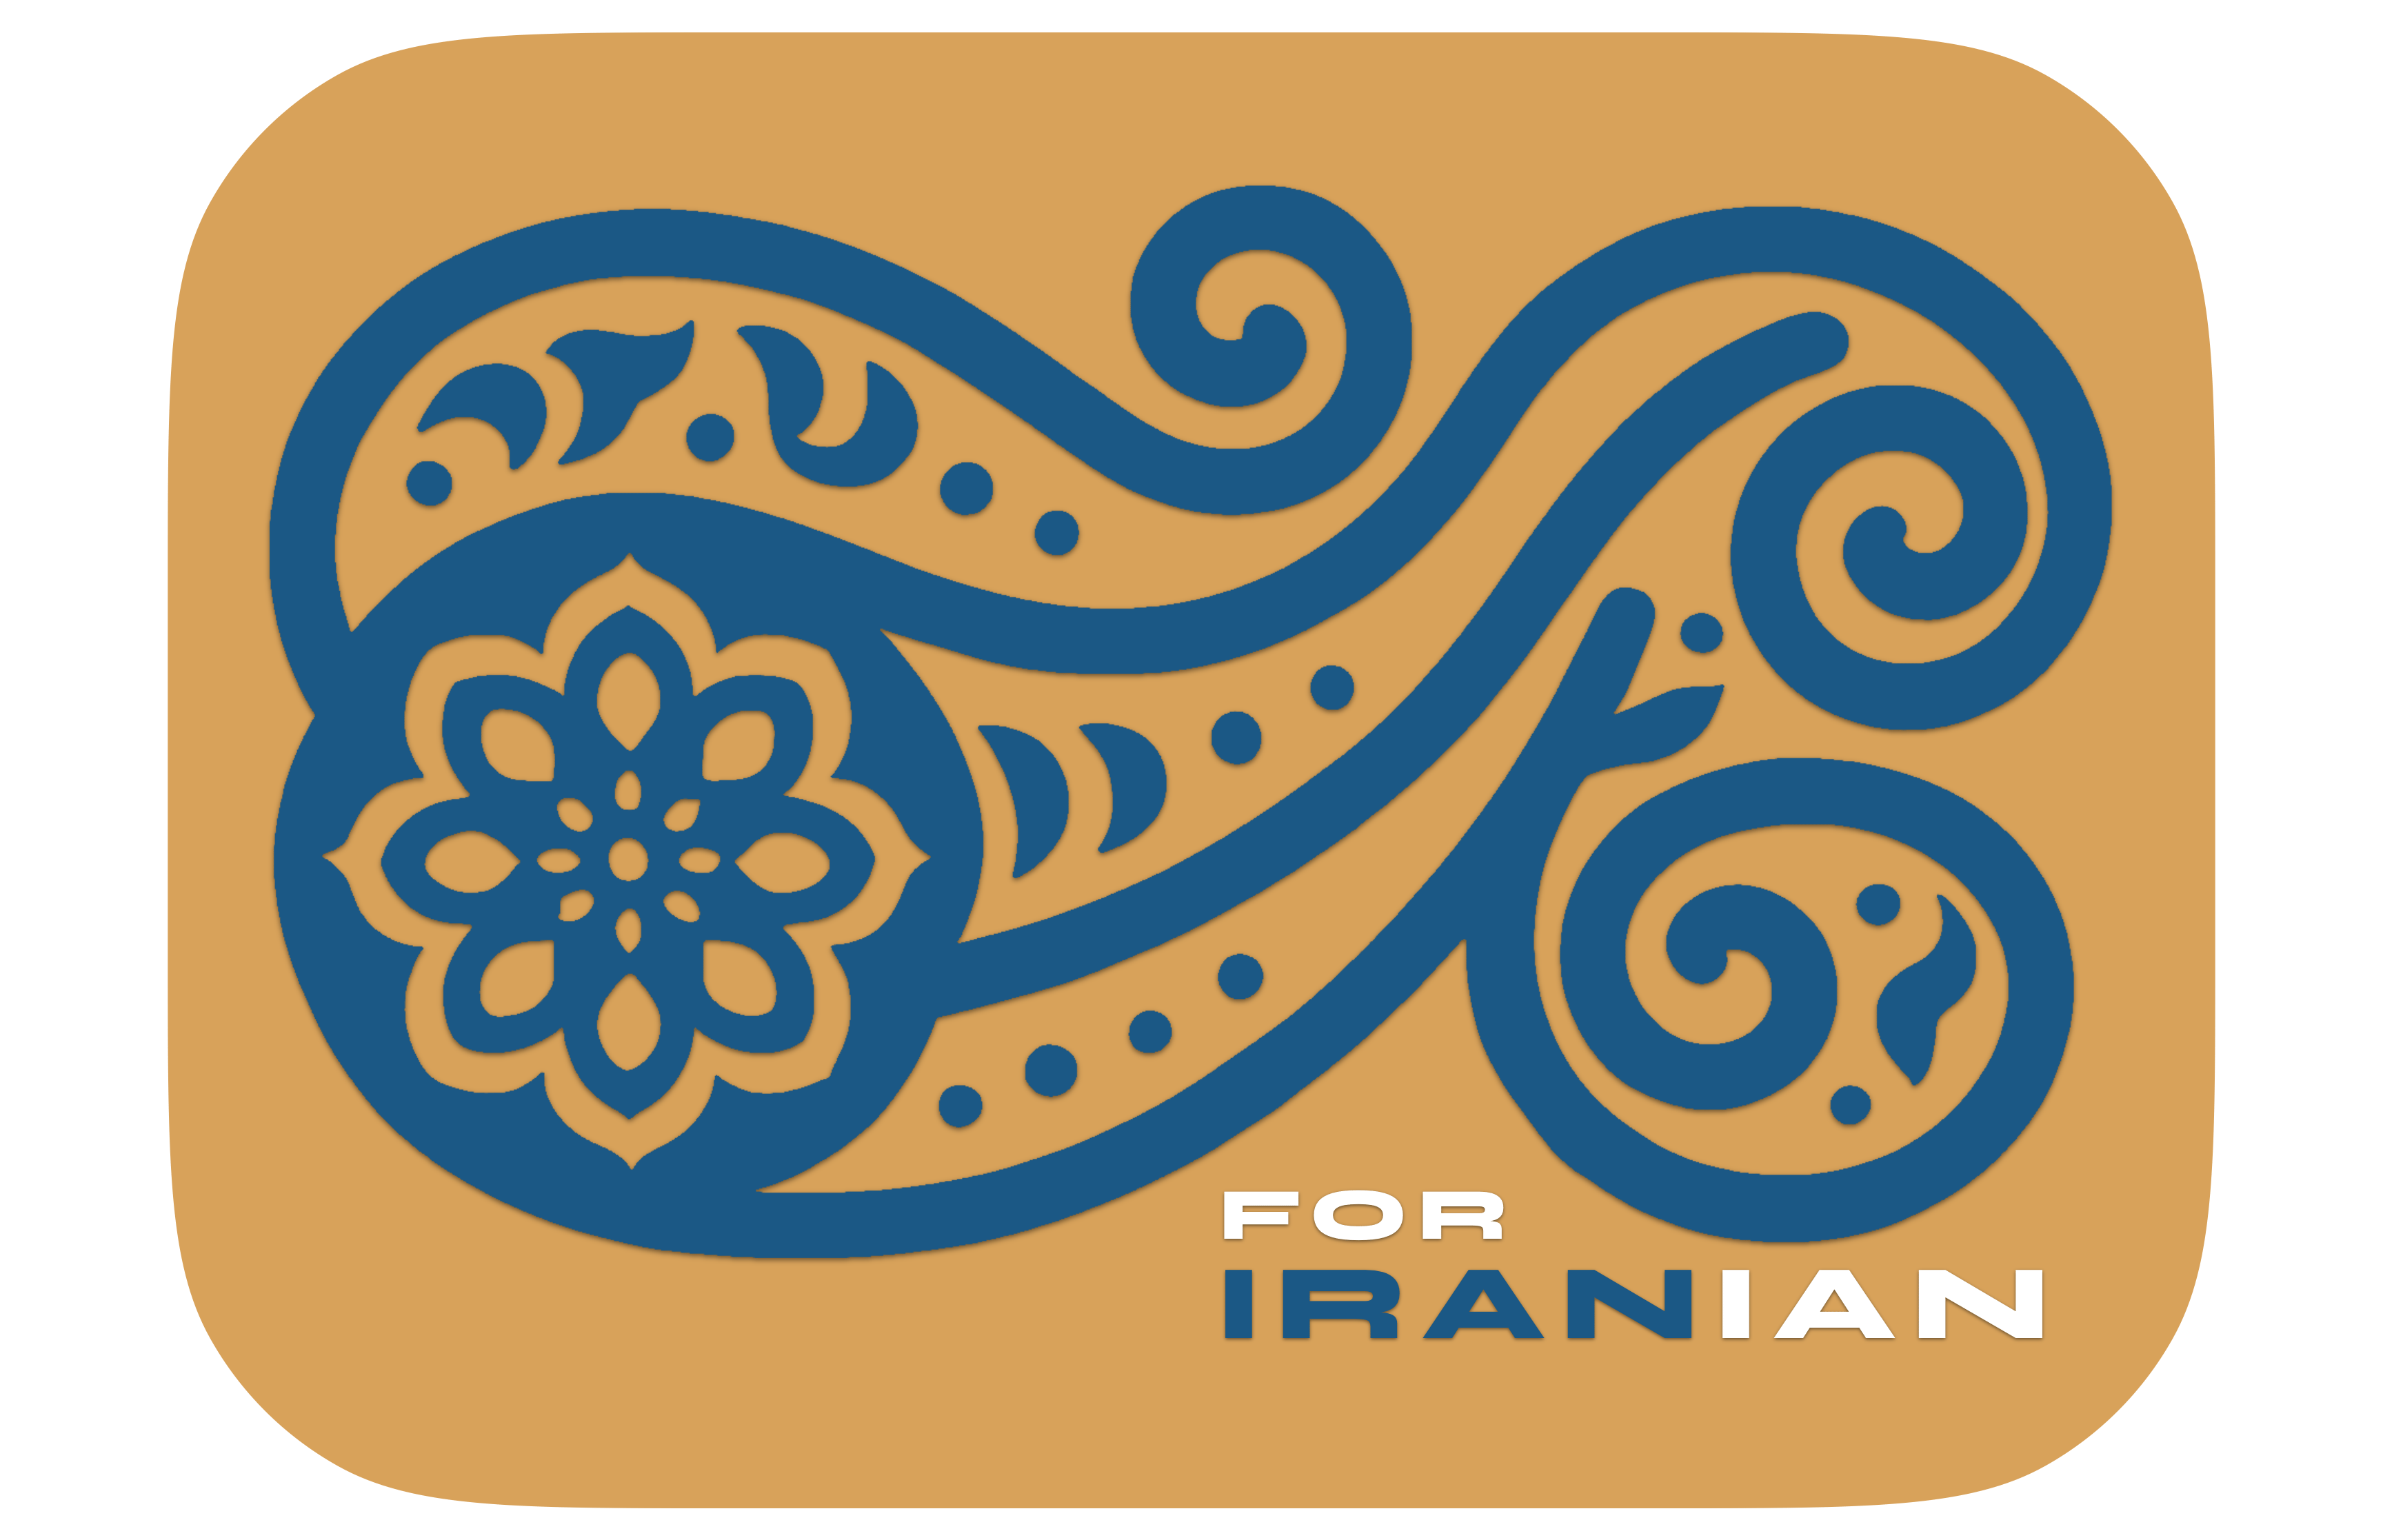 For Iranian – نیازمندی های ایرانی های خارج از کشور